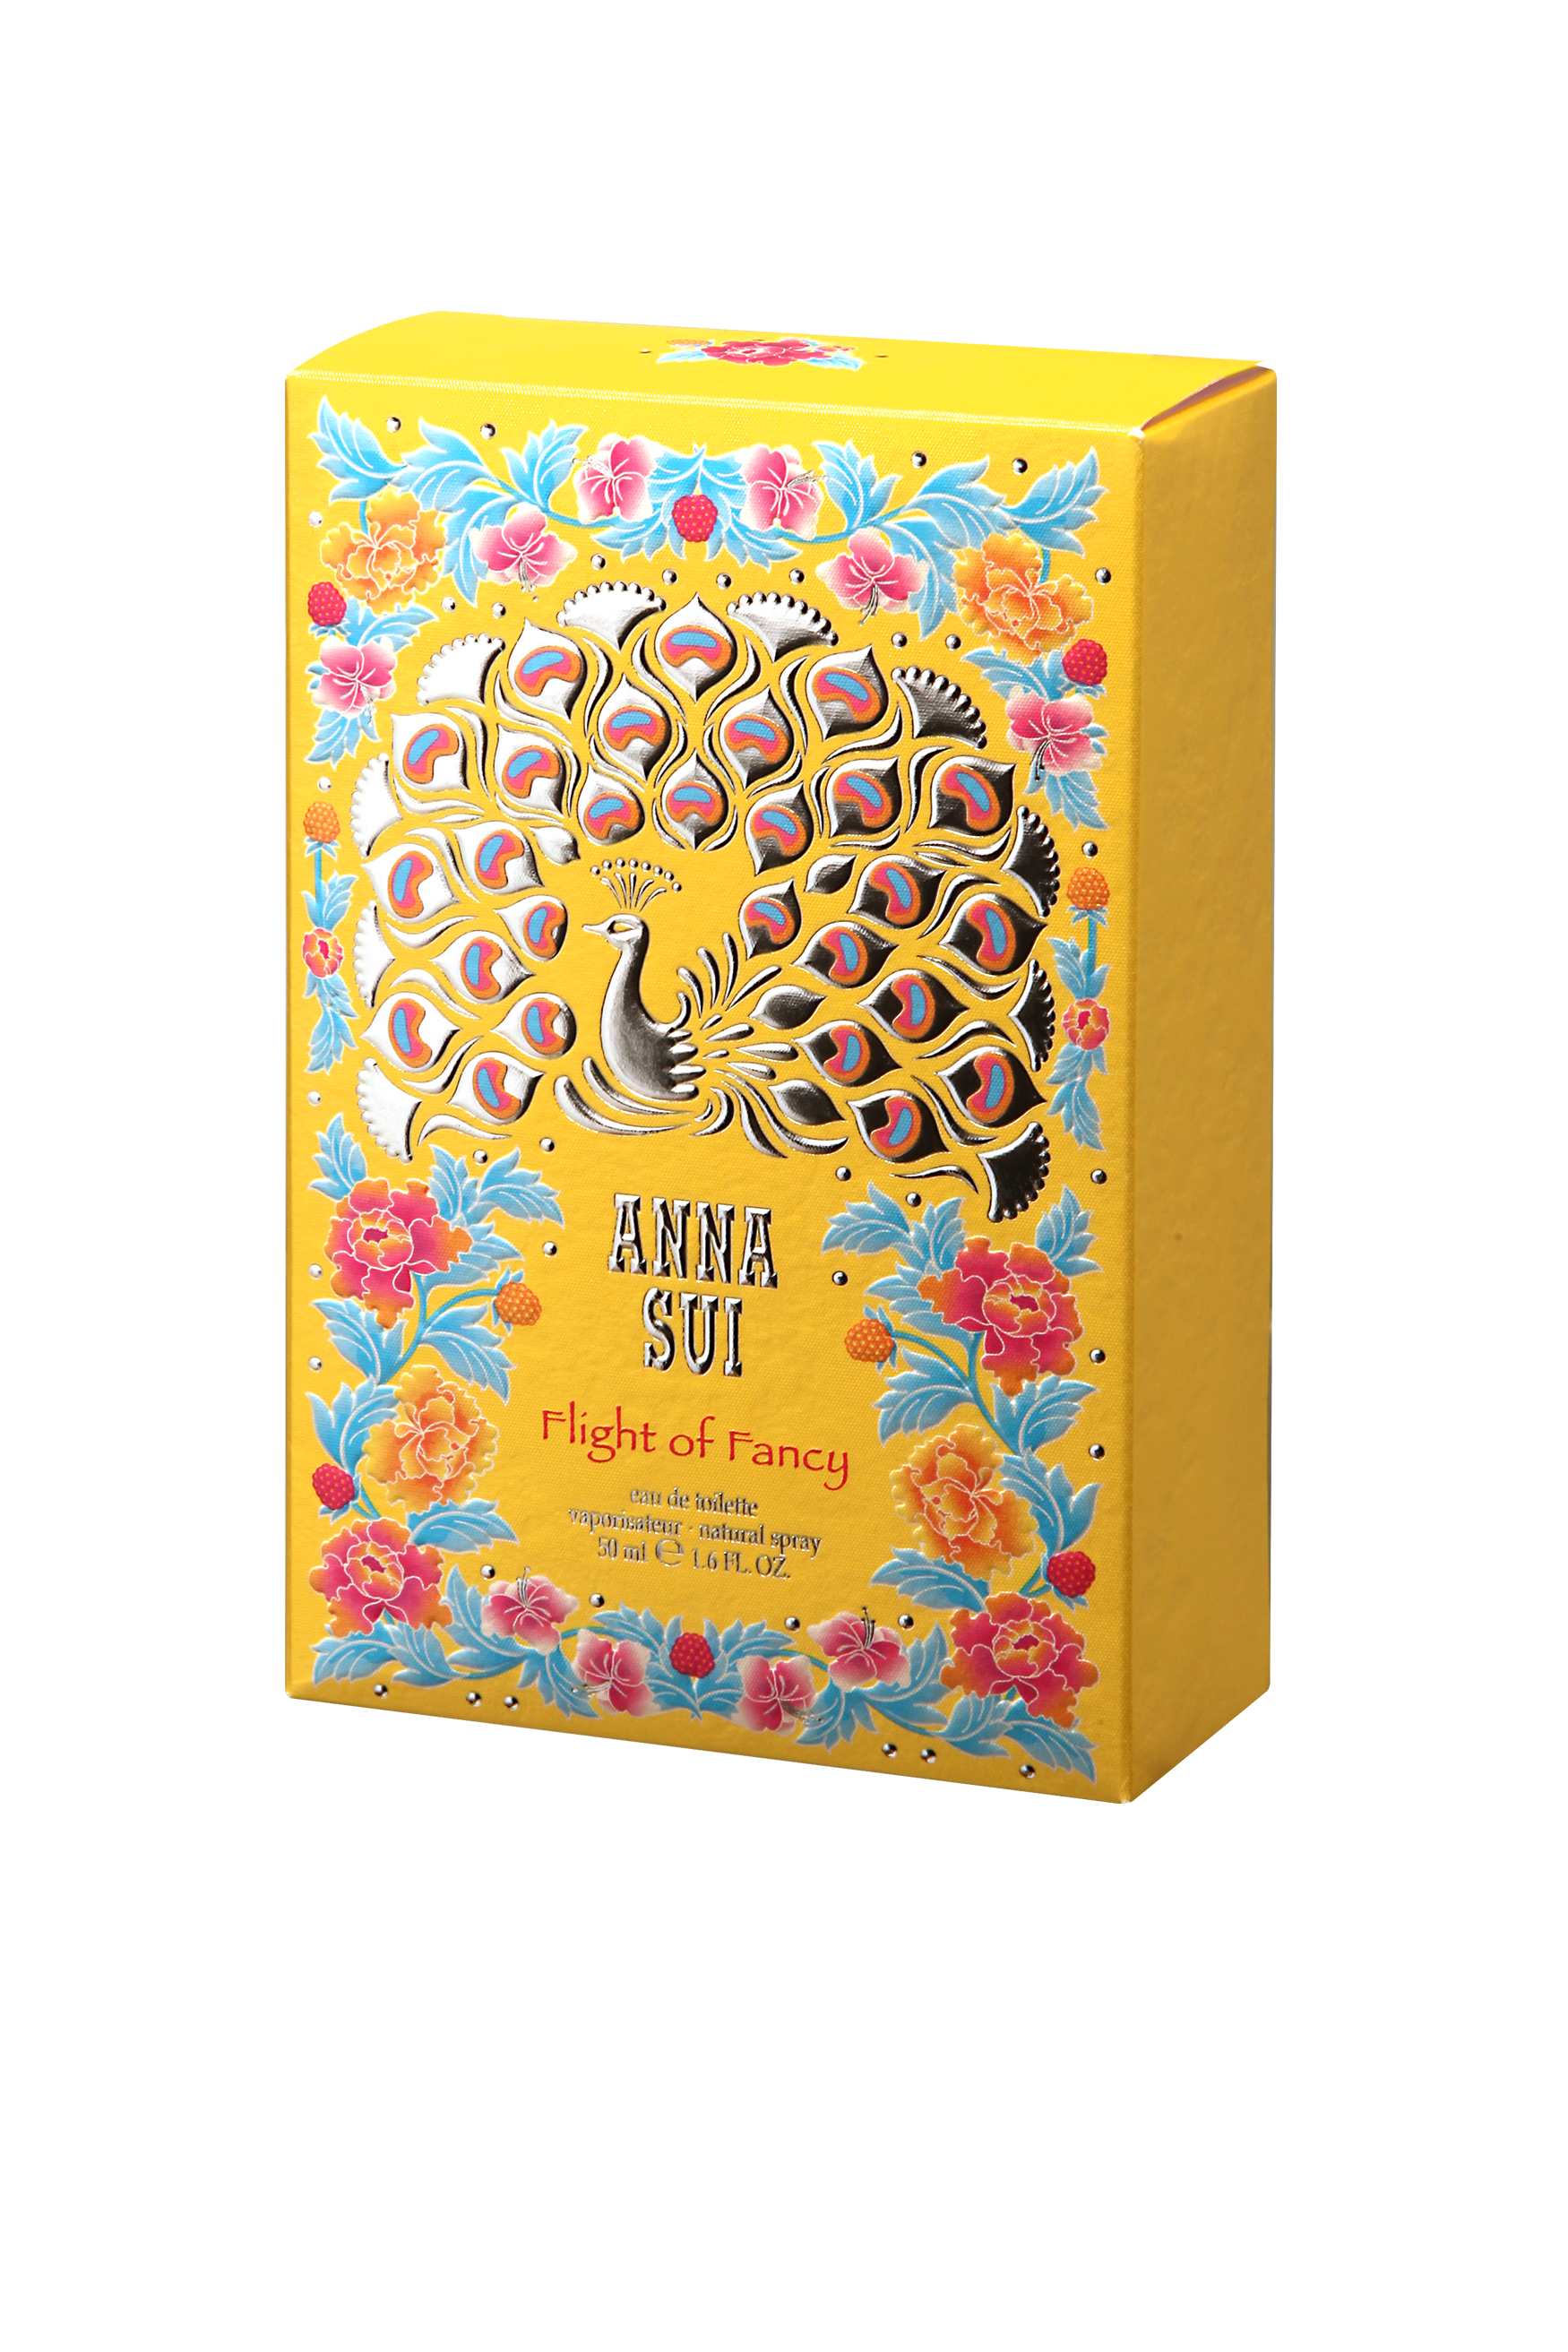 Yellow box with peacock design and Anna Sui logo, displaying perfume name